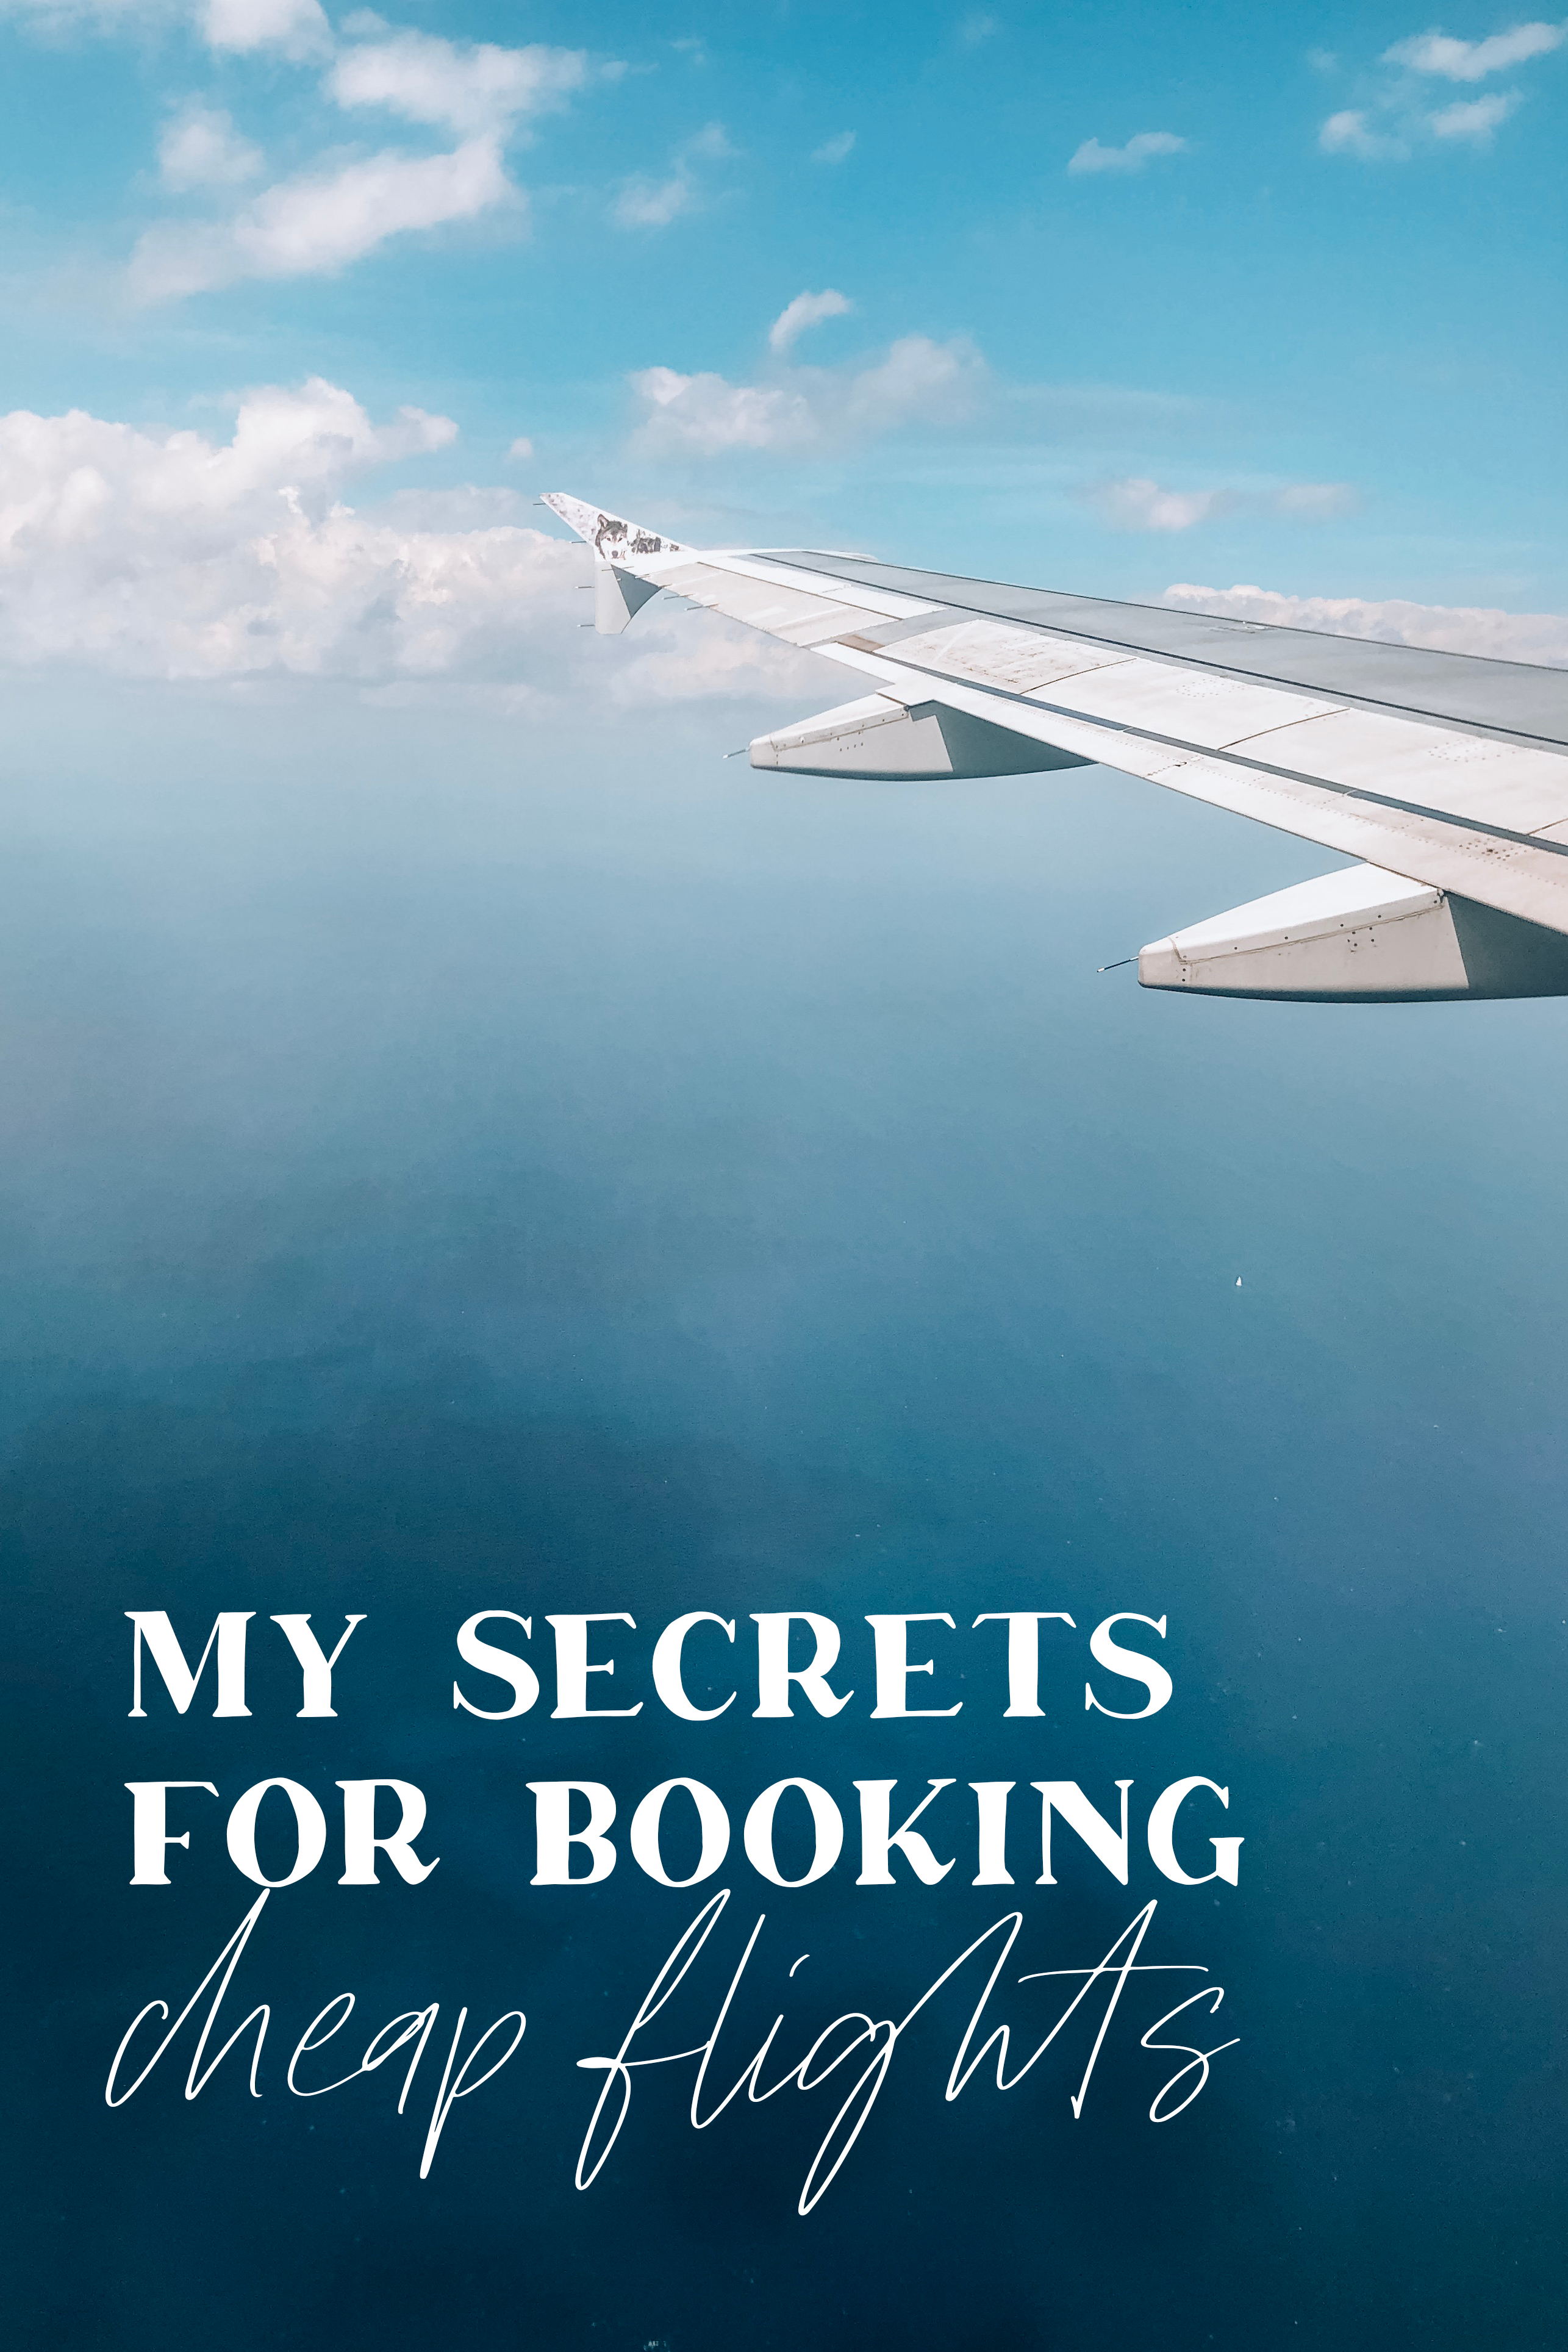 My secrets for booking cheap flights Andrea Vehige